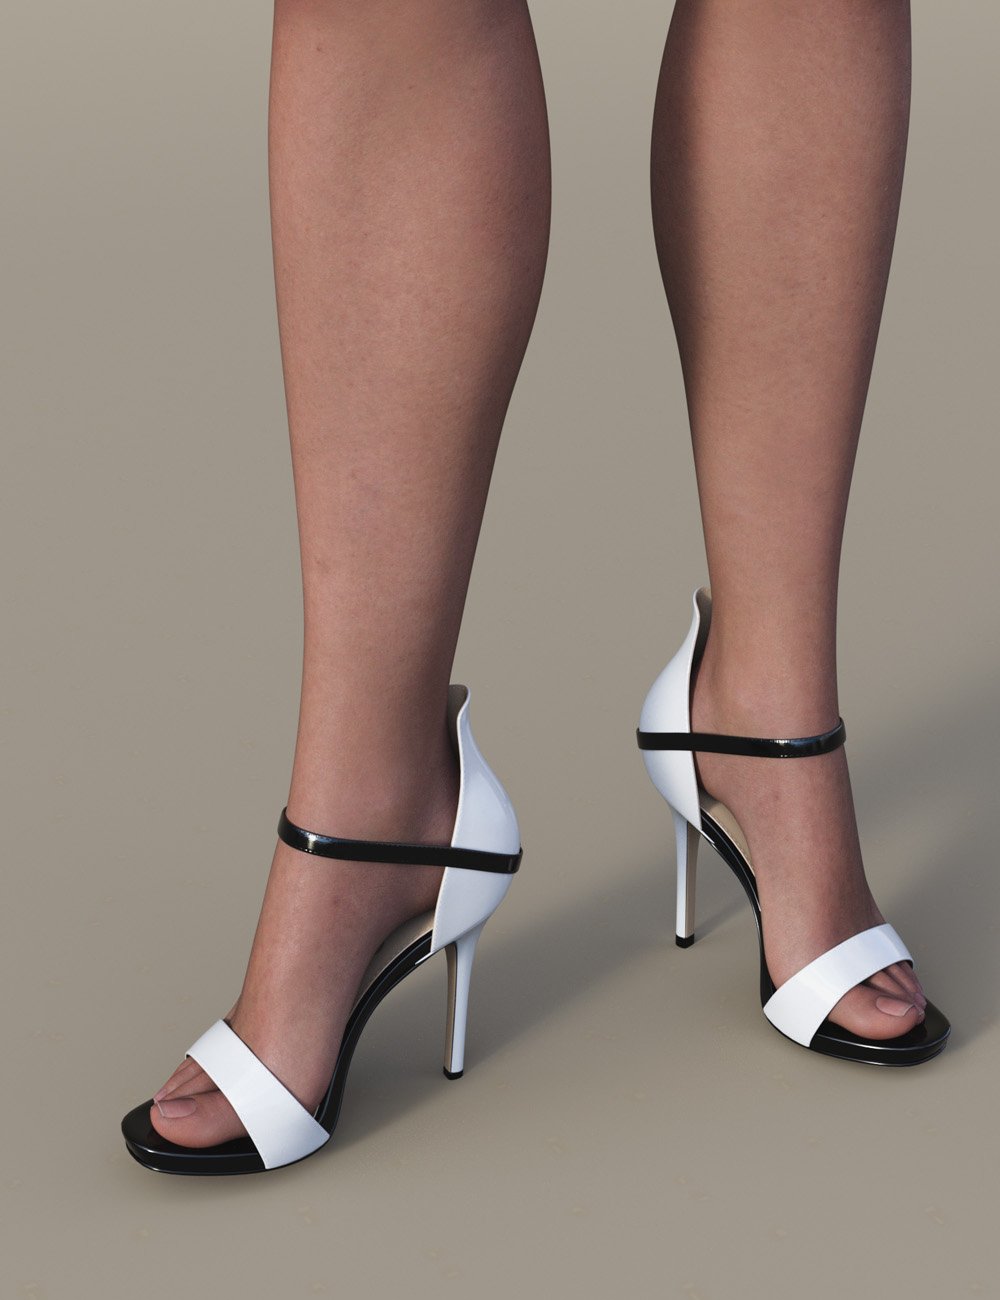 Sandals 5 for Genesis 9 by: dx30, 3D Models by Daz 3D